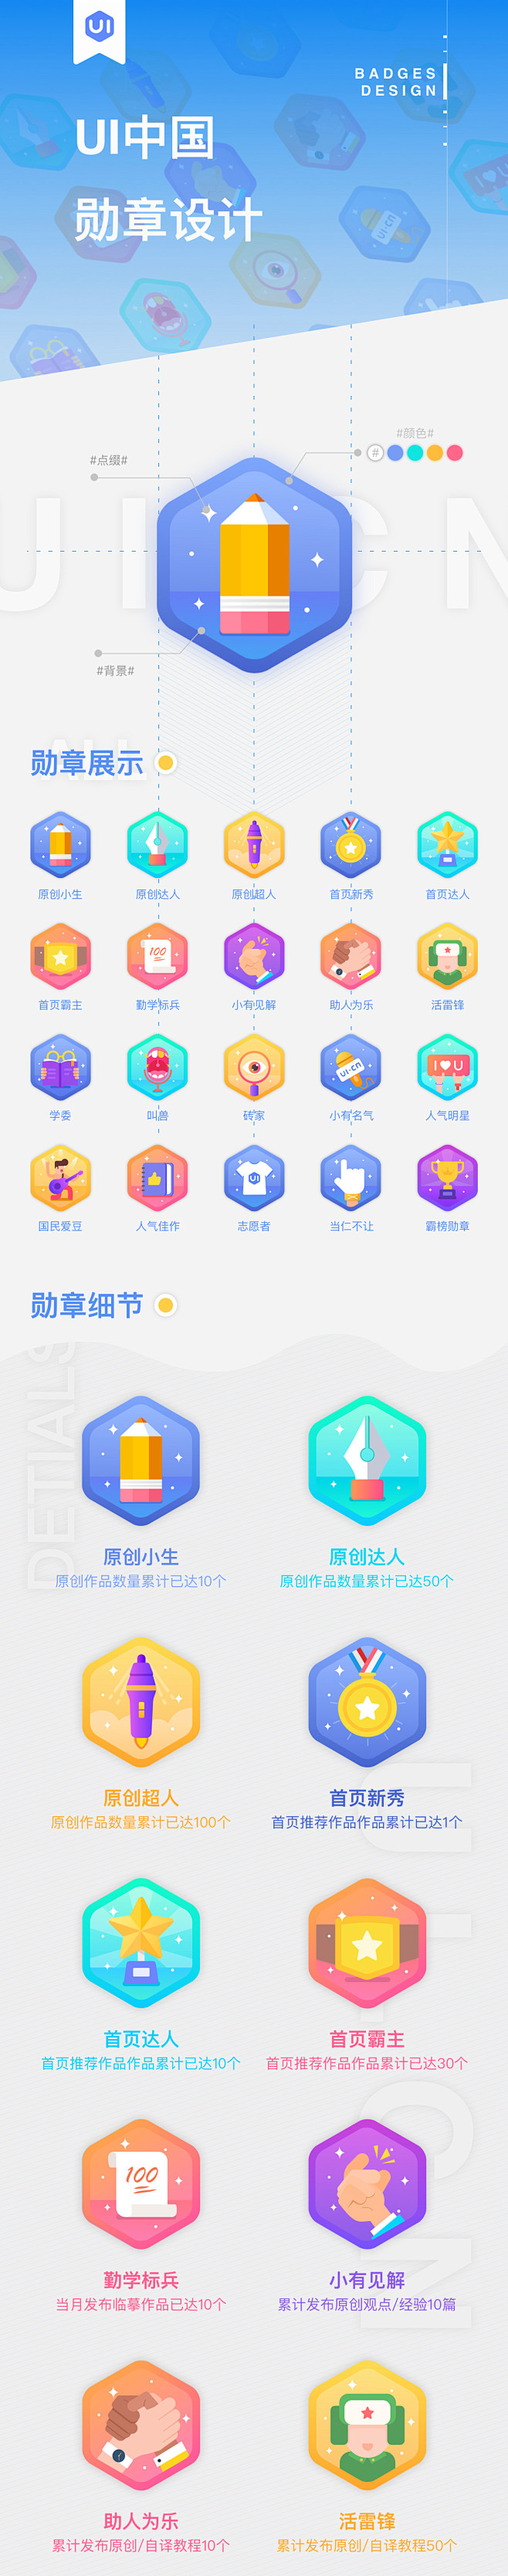 UI中国勋章设计